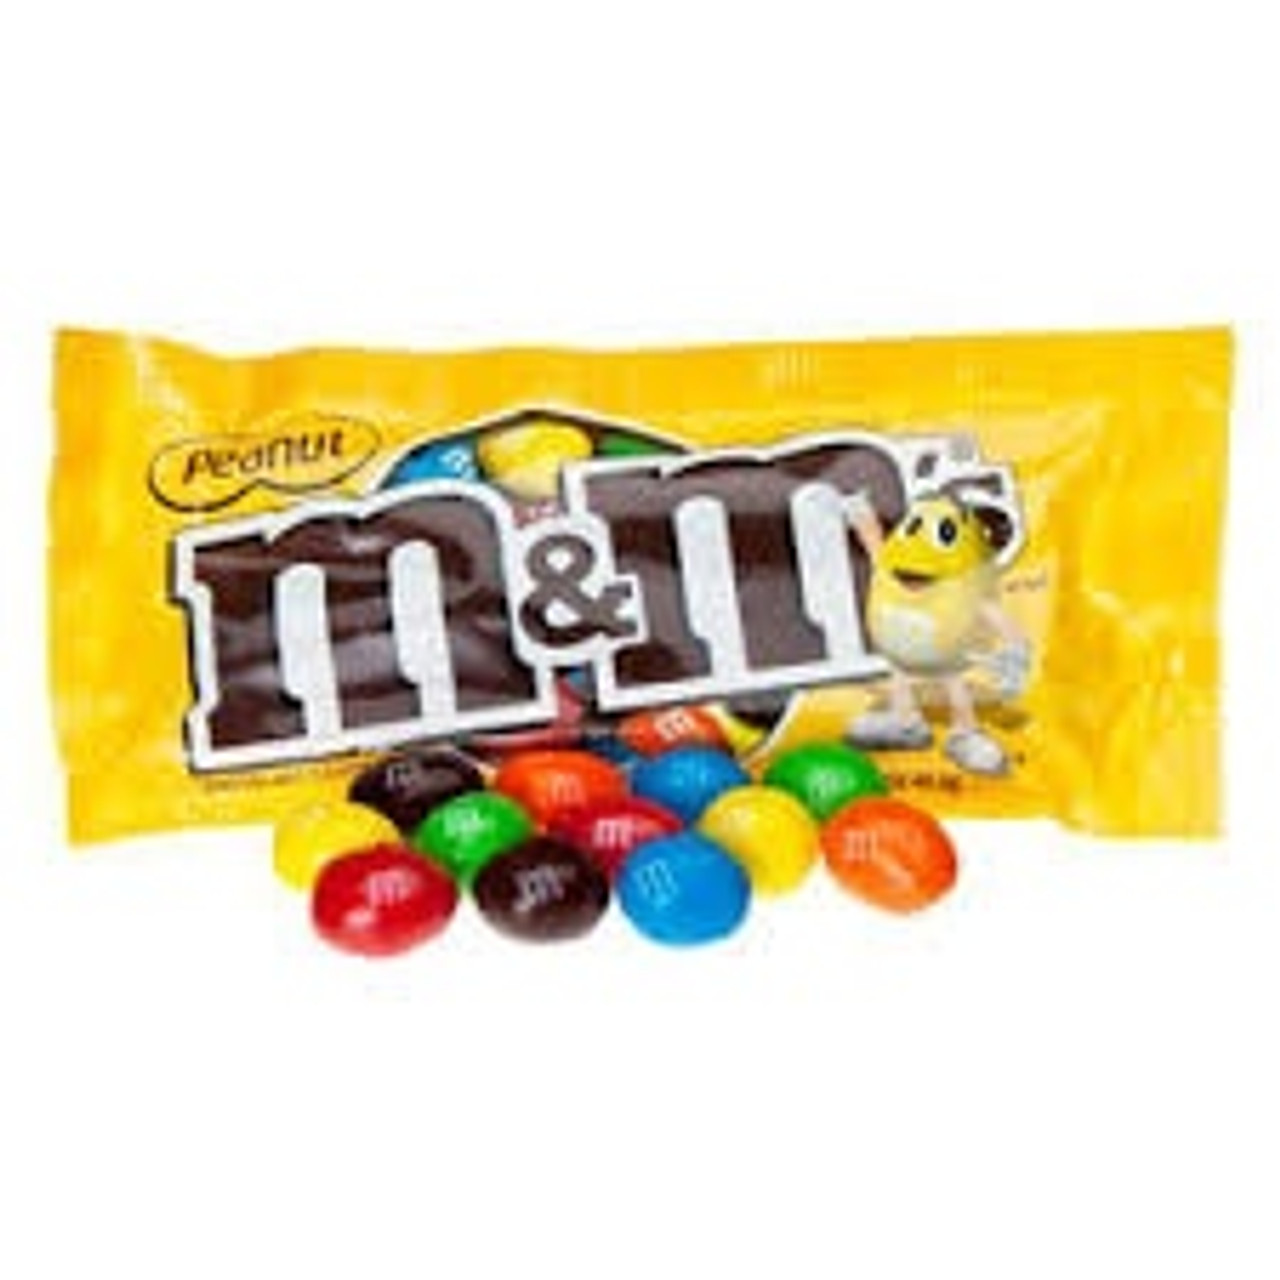 M Ms Peanut Chocolate Candies 1.74 Oz - Office Depot